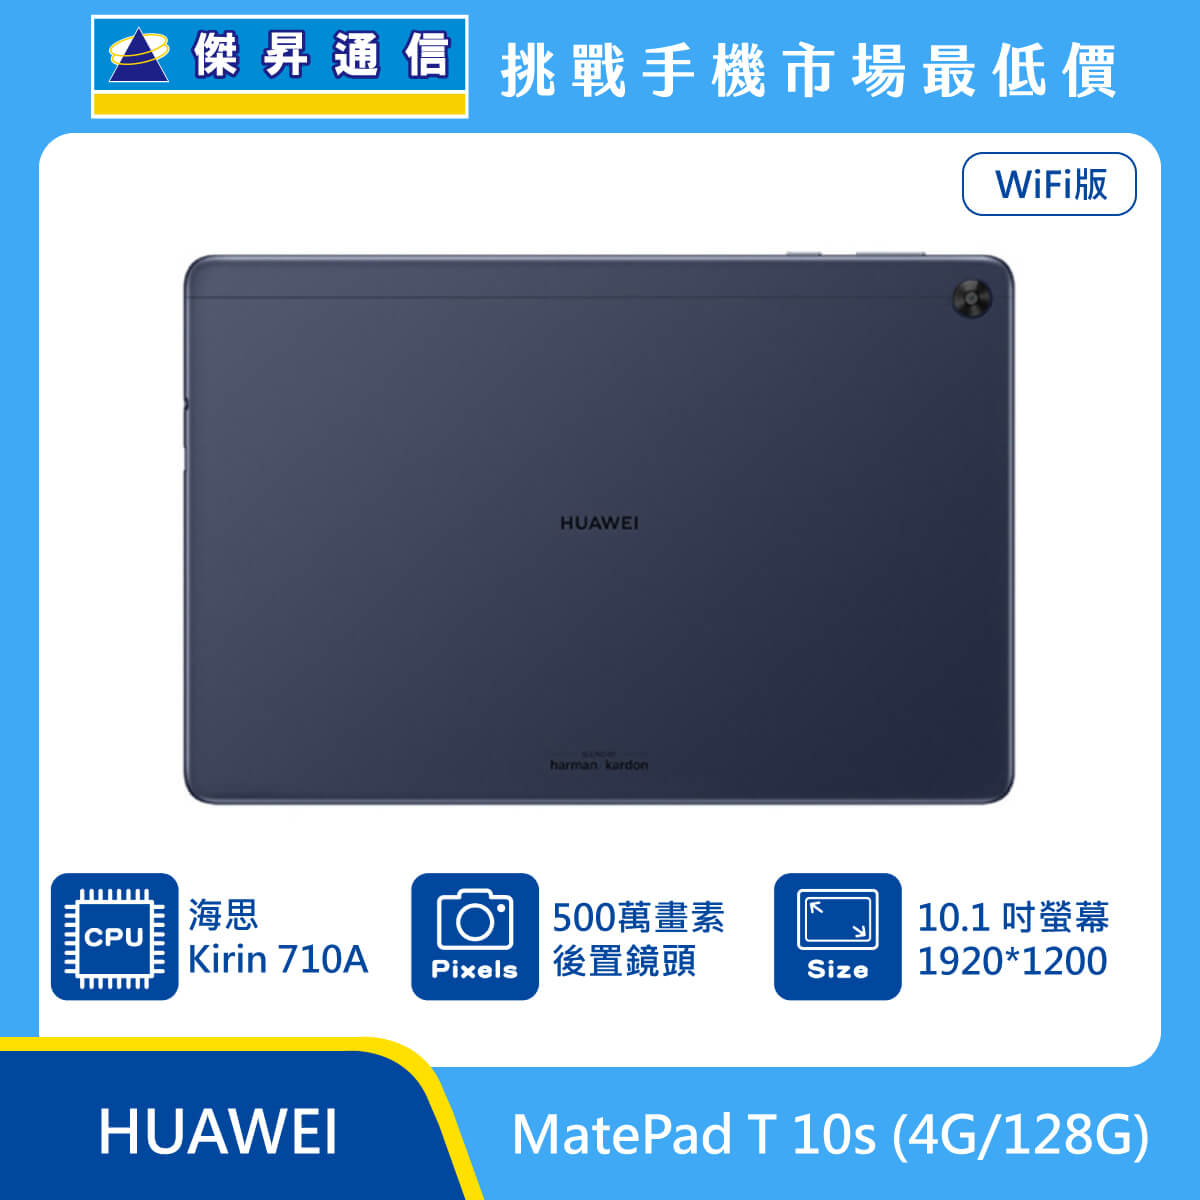 HUAWEI 平板 MatePad T 10s (4G/128G)